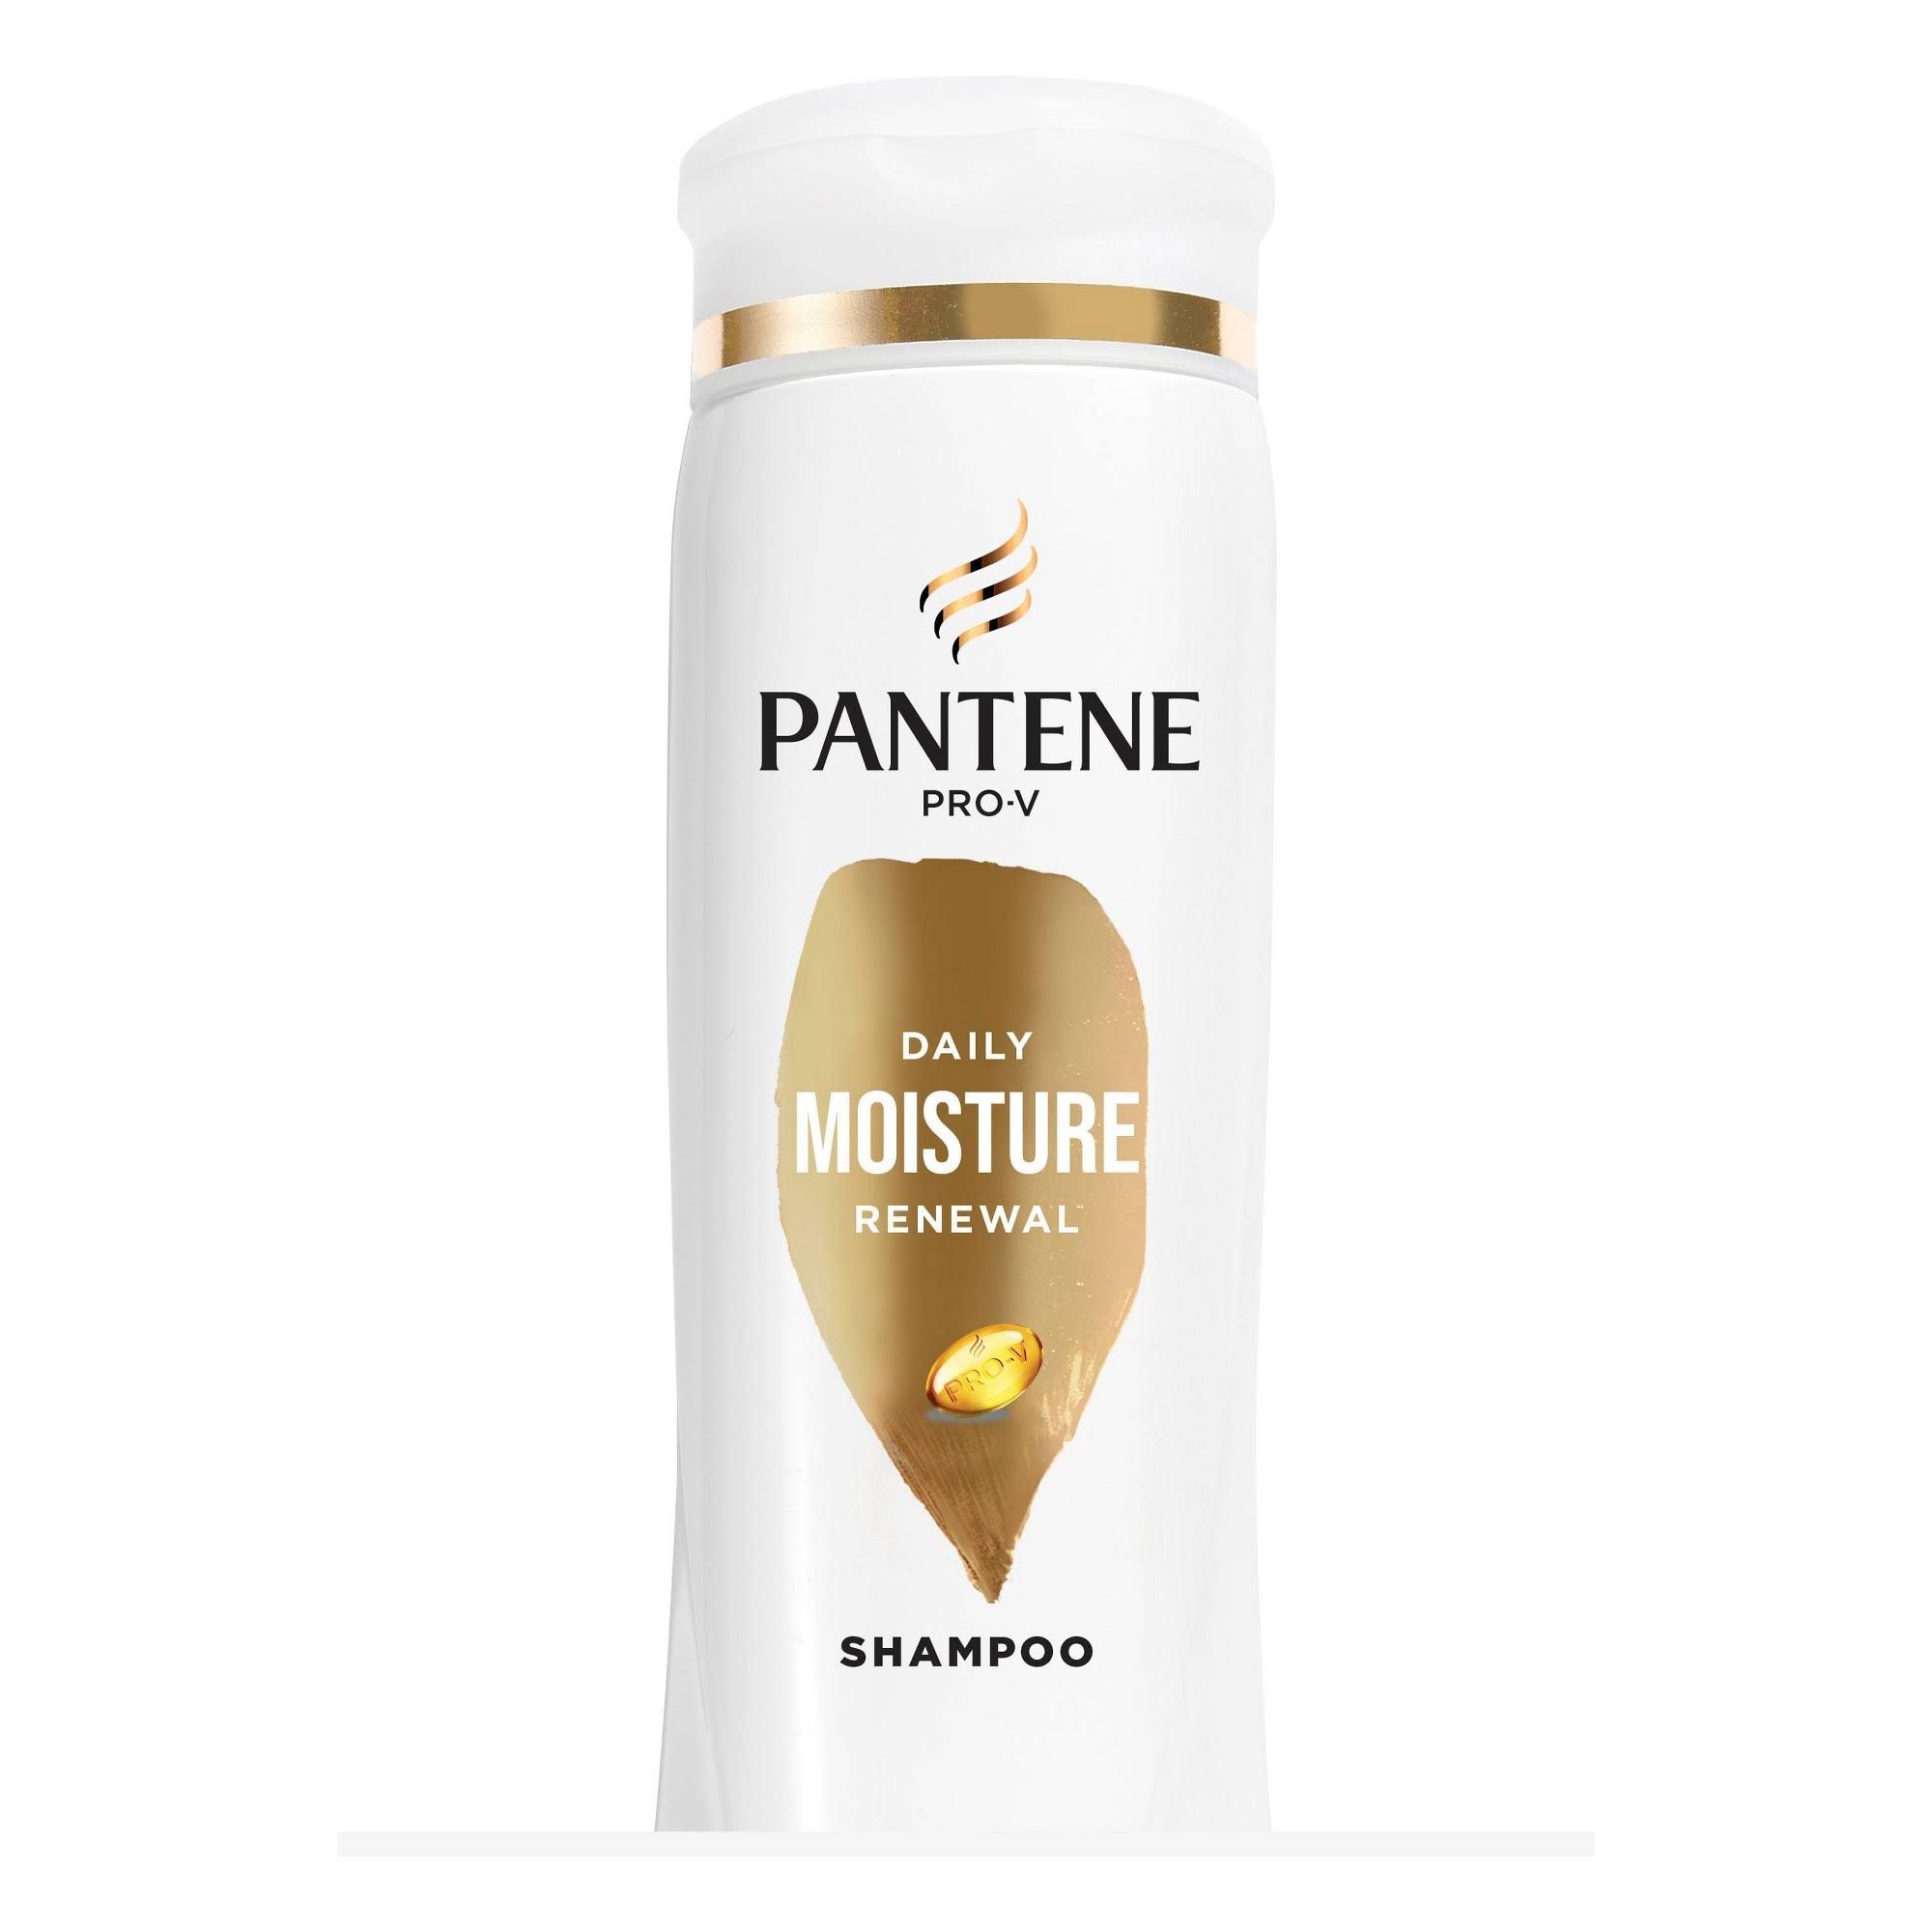 Pantene Pro-V Shampoo, Daily Moisture Renewal - 355 ml